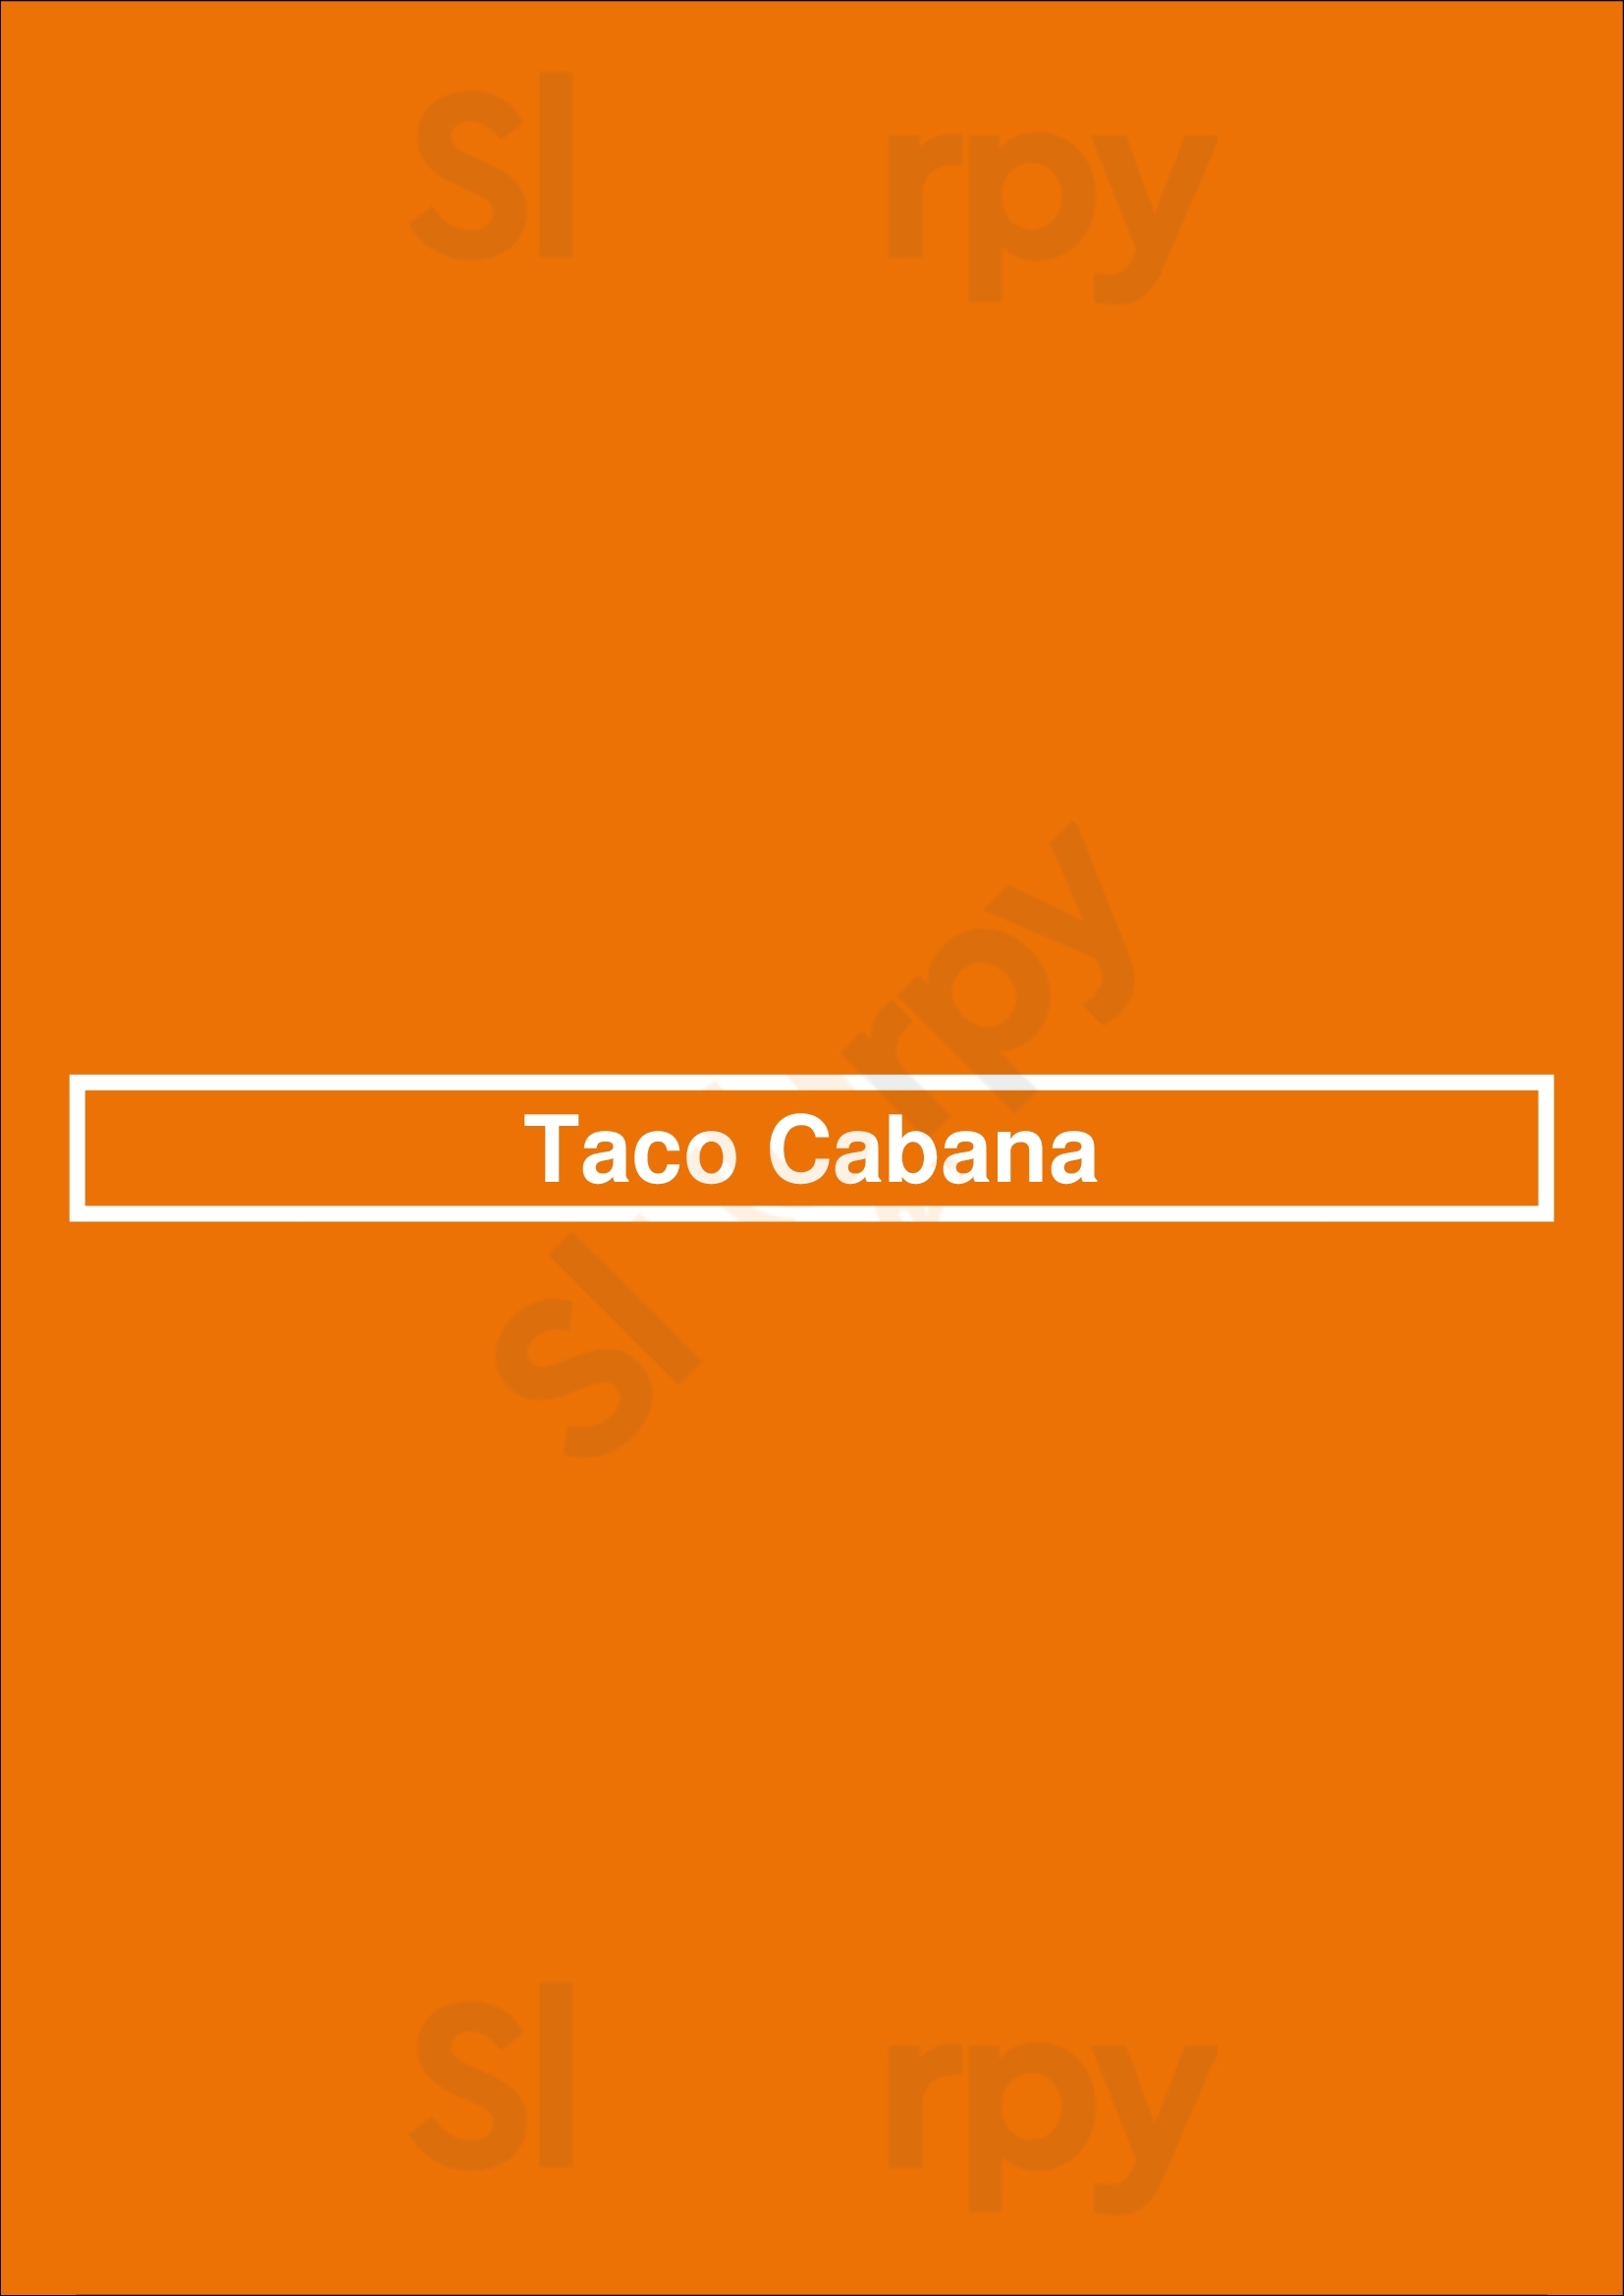 Taco Cabana Dallas Menu - 1